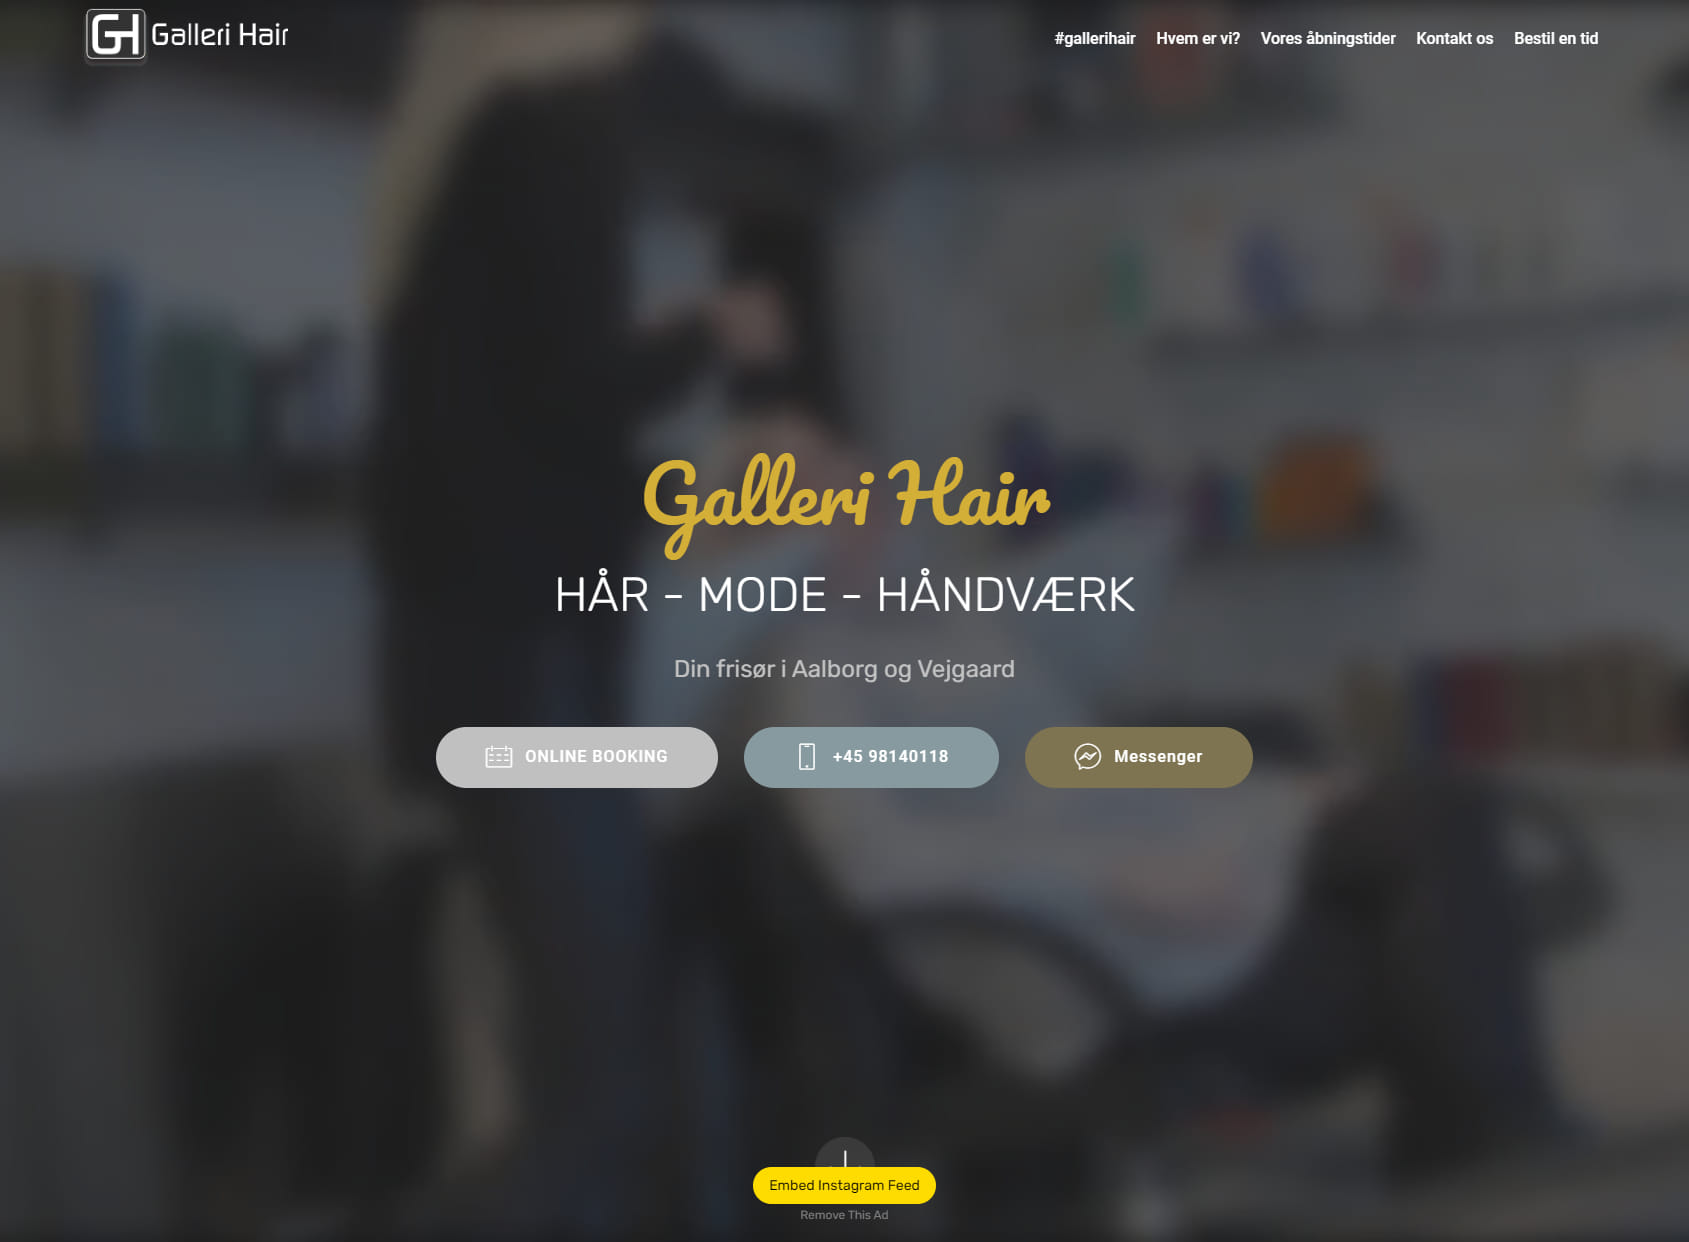 Gallery Hair - Your hairdresser in Aalborg